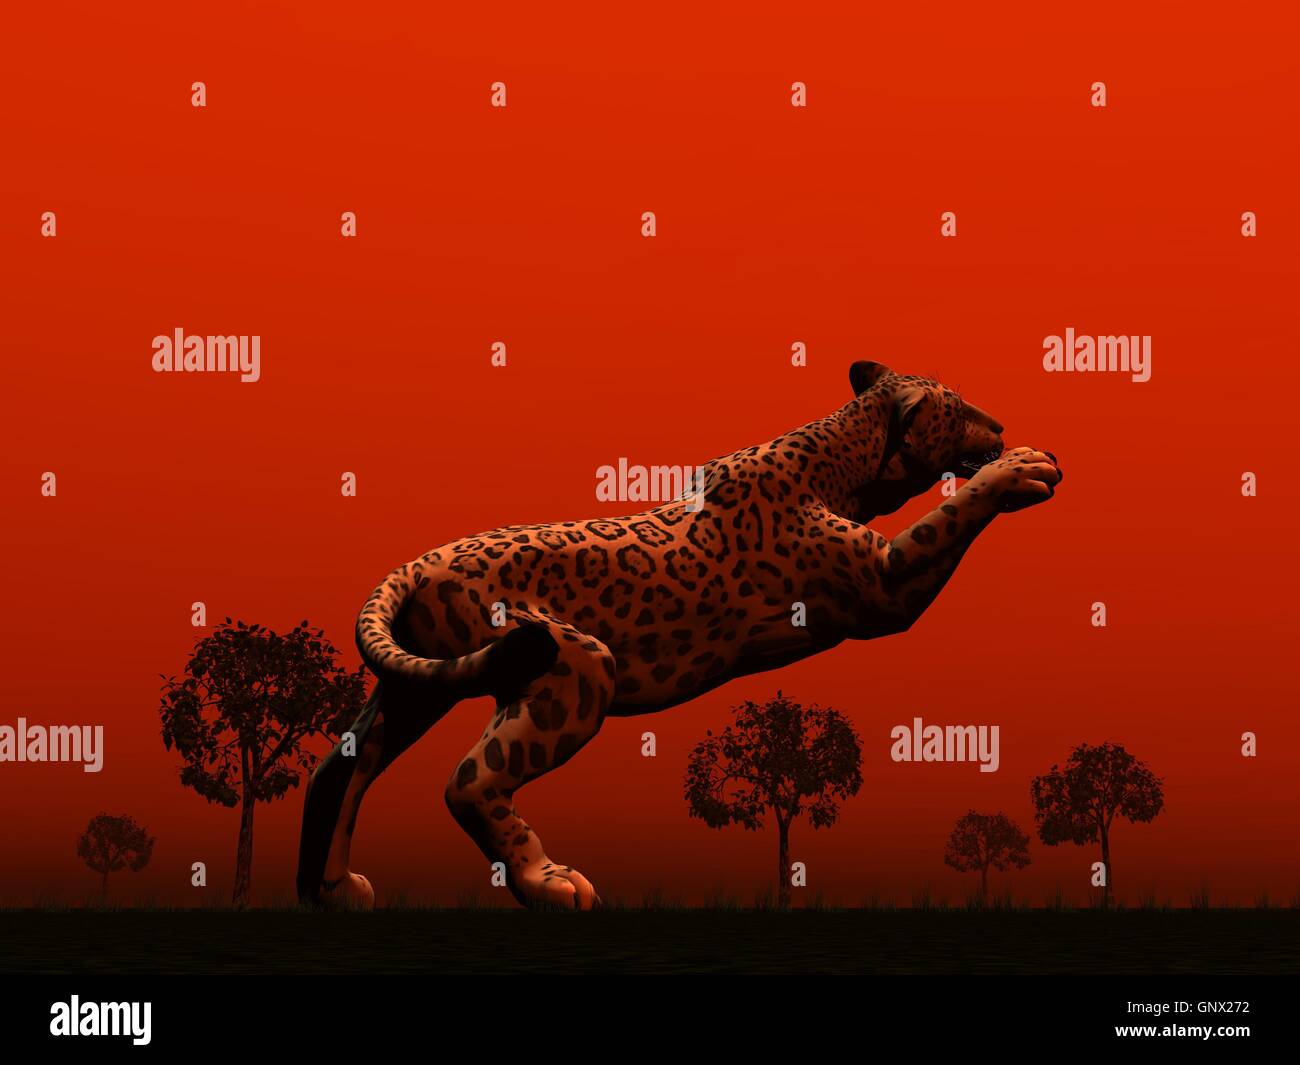 Panther jumping Stock Photo, Royalty Free Image: 116742502 - Alamy